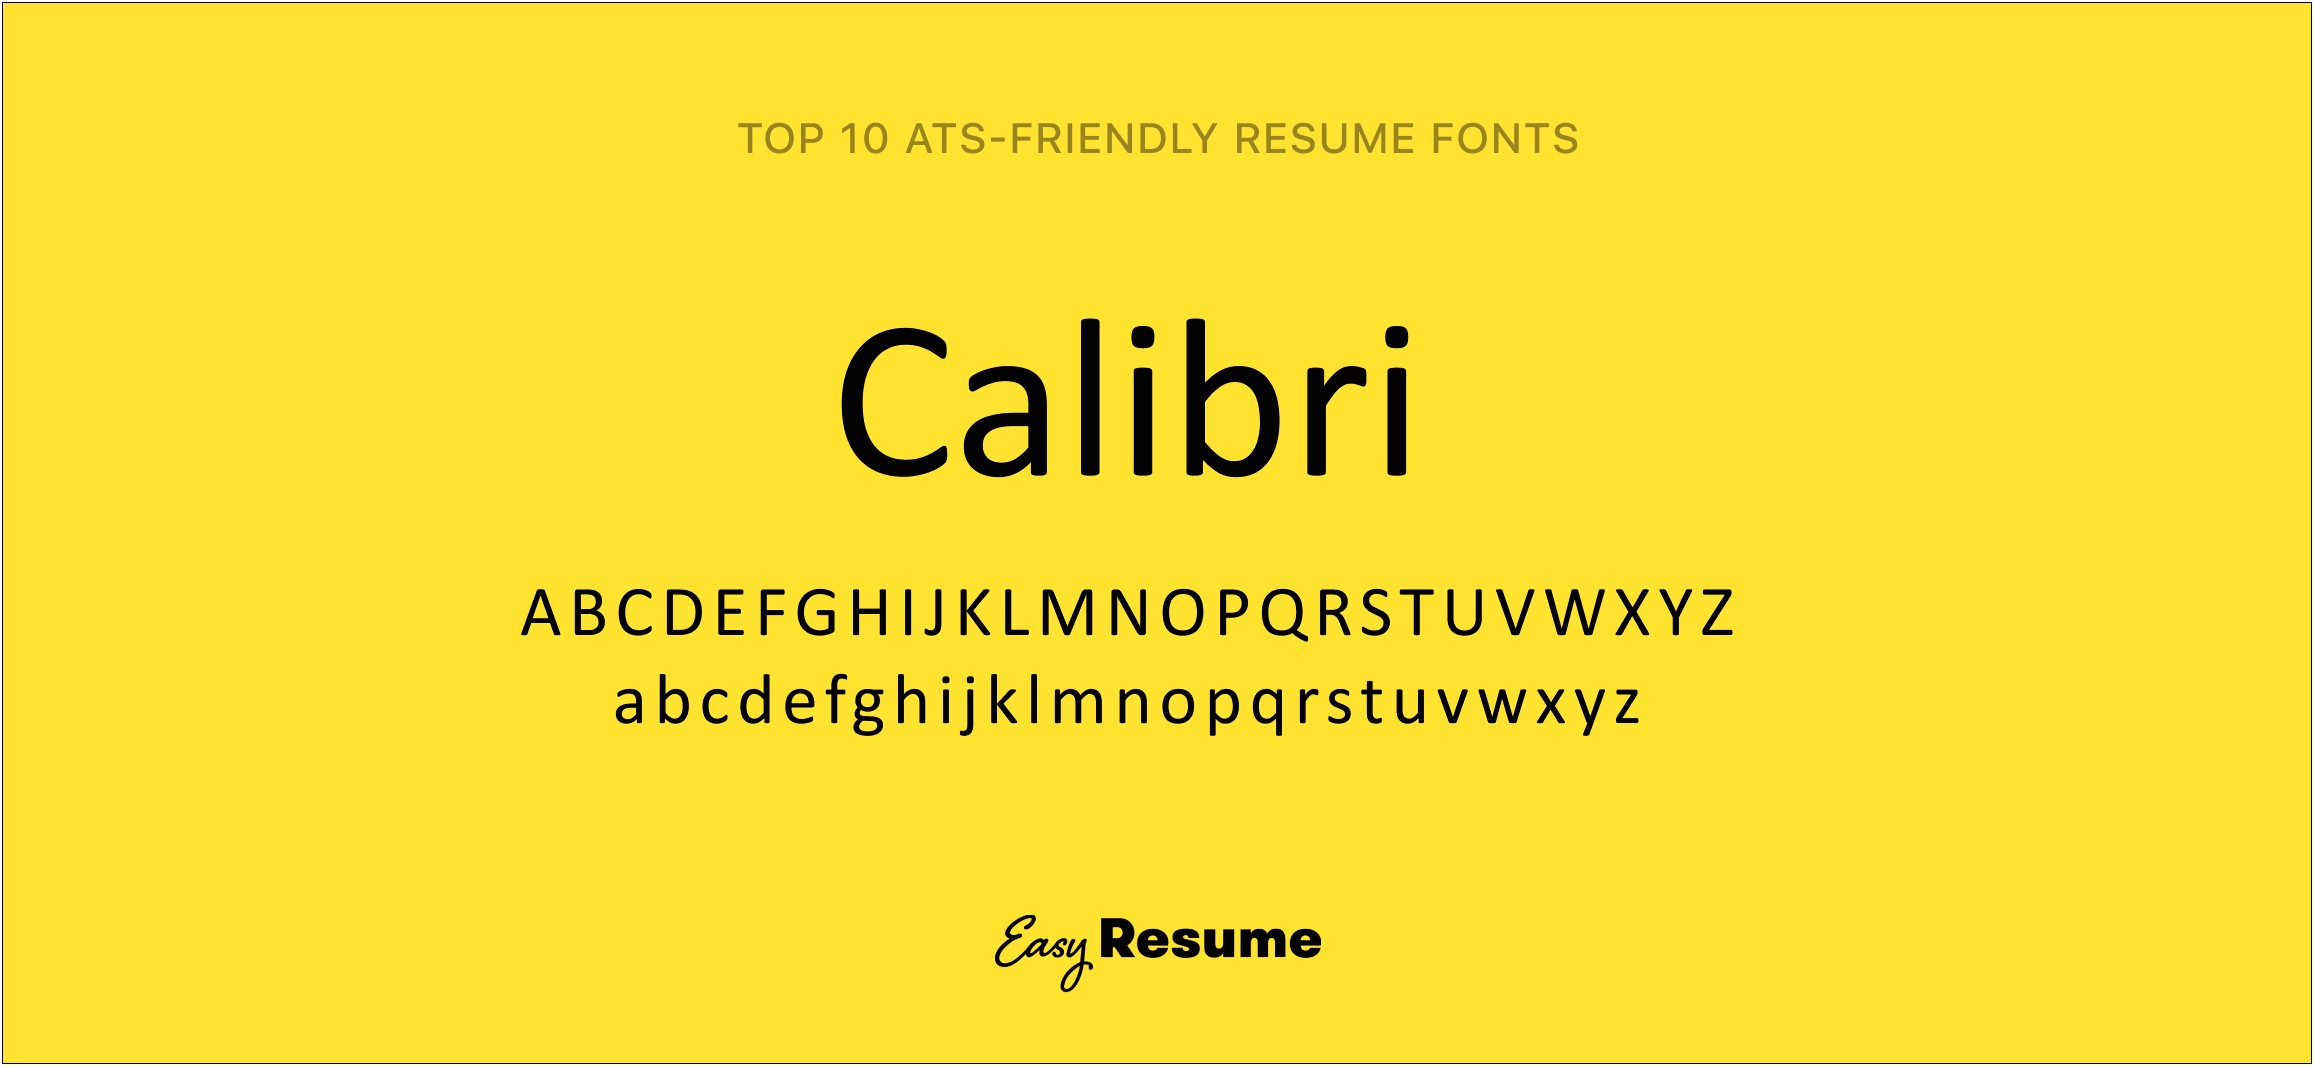 Best Resume Font Size For Calibri